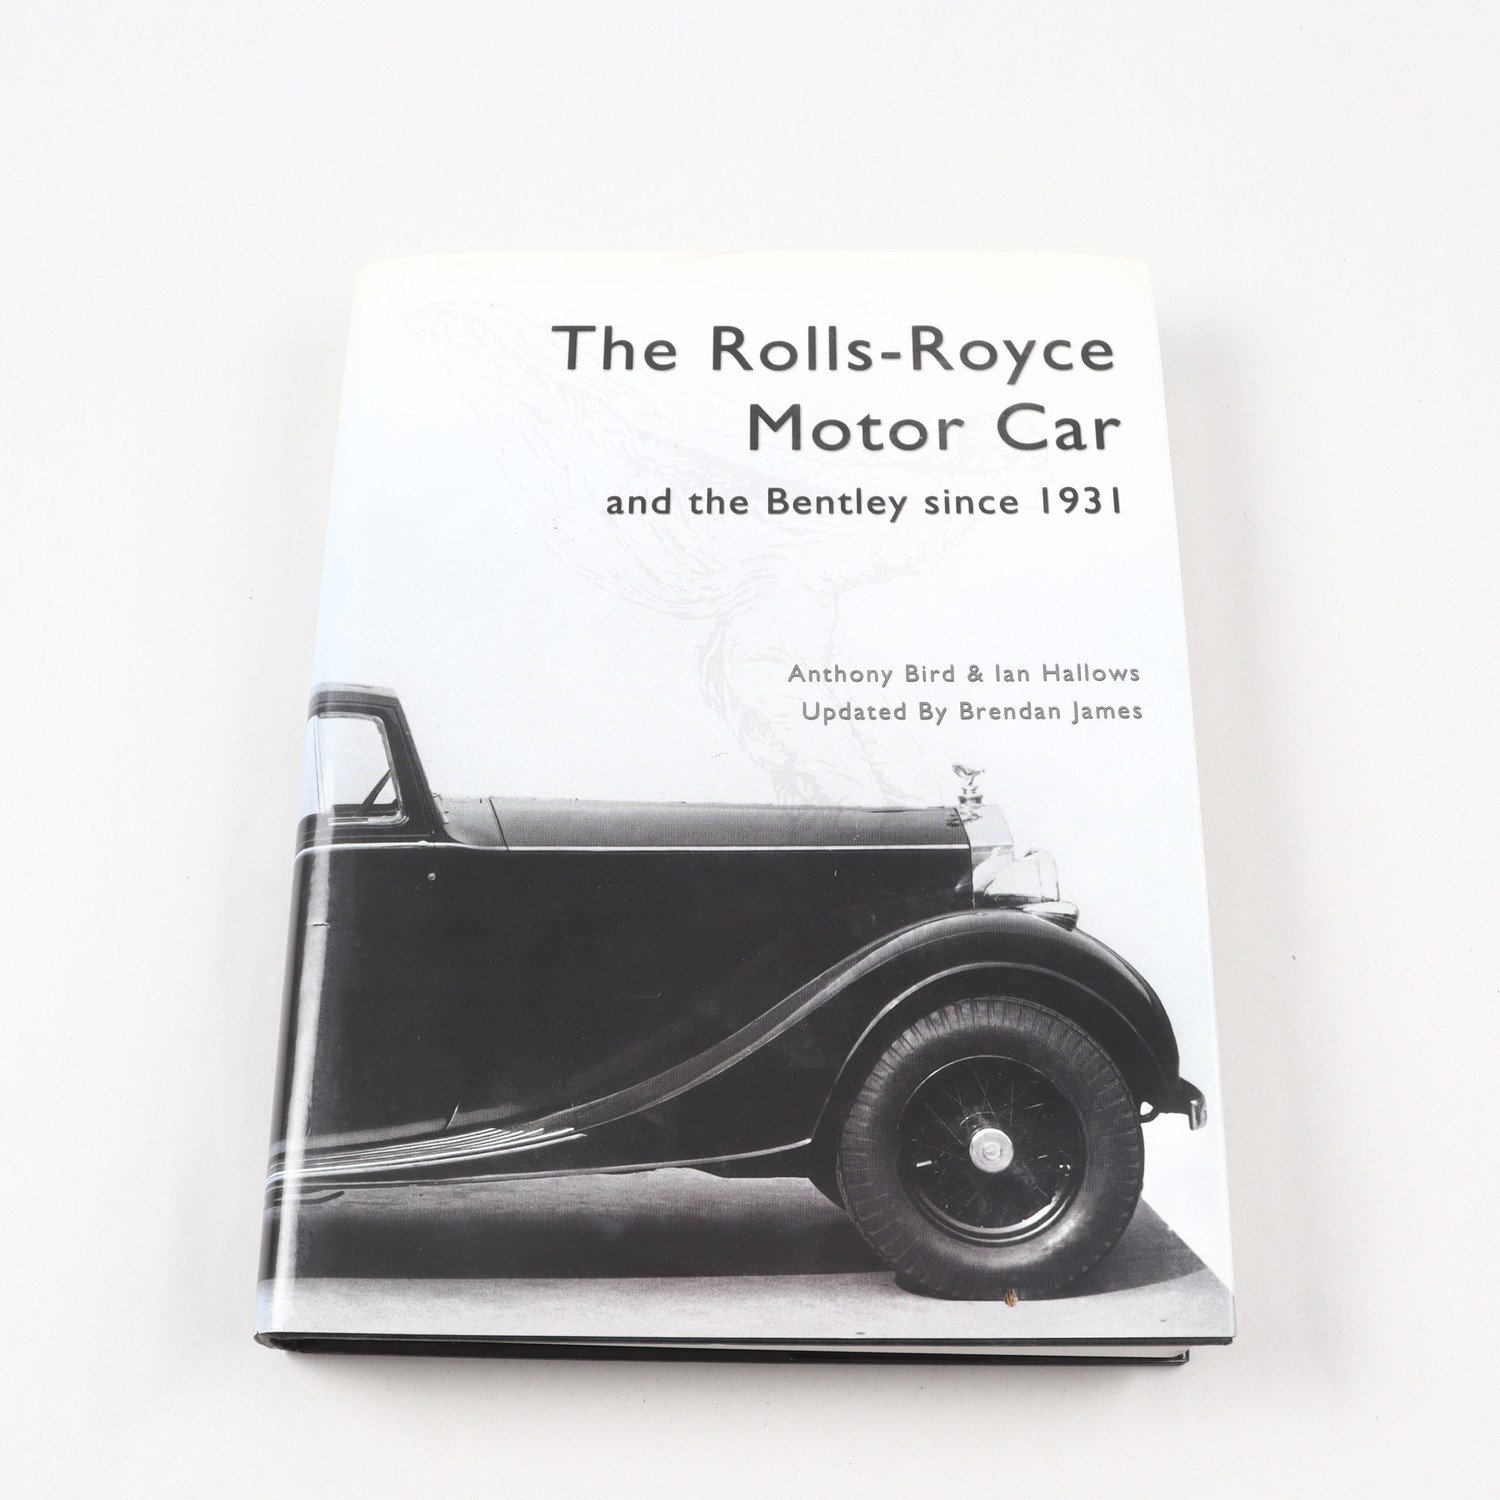 The Rolls-Royce Motor Car and tne Bentley since 1931, Anthony Bird & Ian Hallows